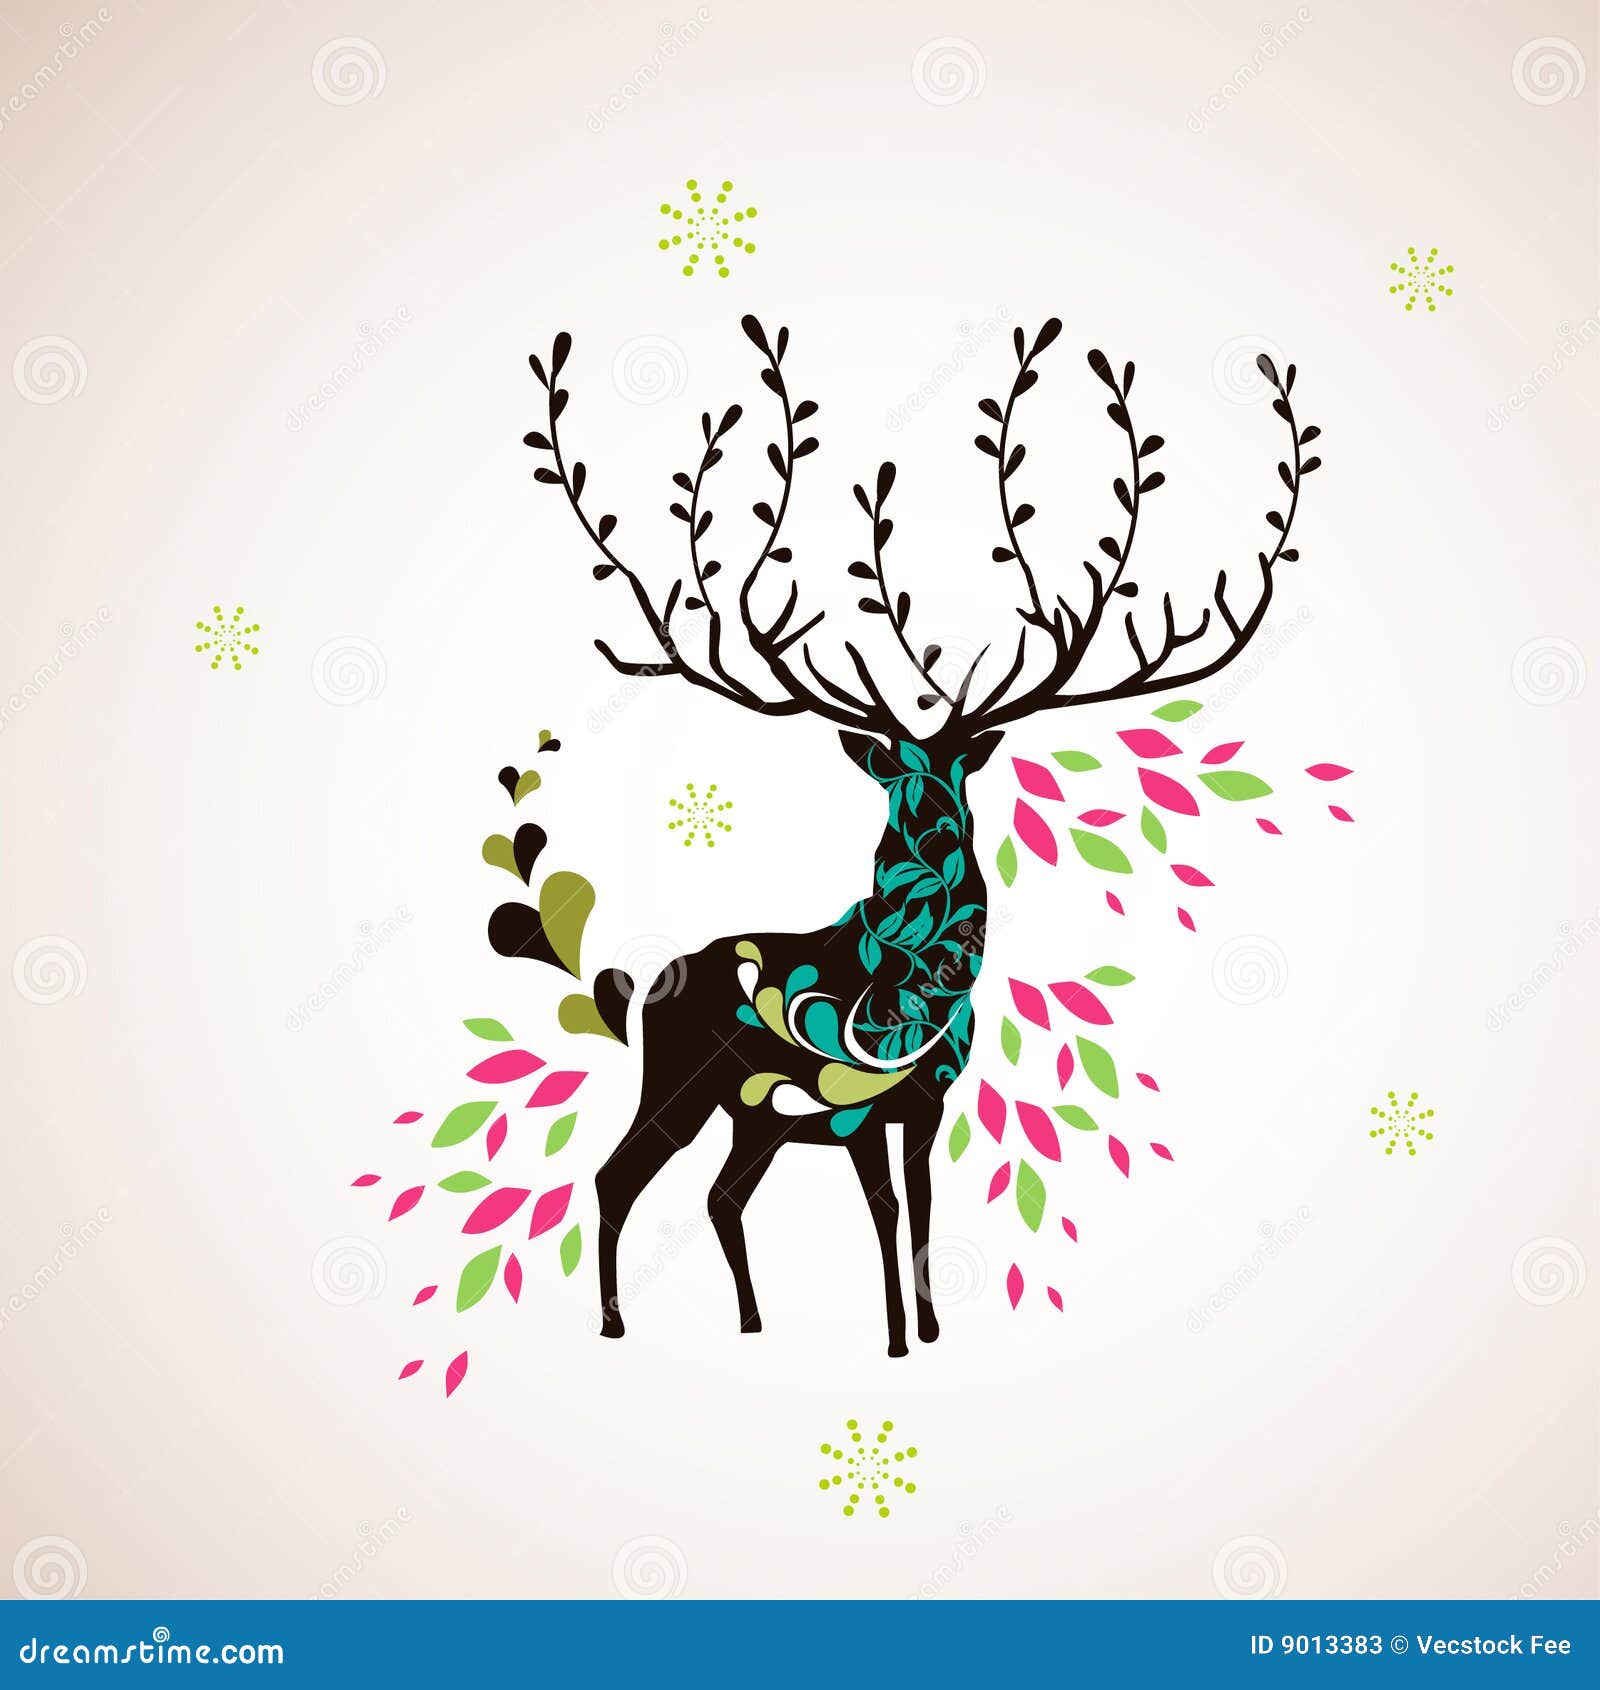 500 Reindeer Pictures  Download Free Images on Unsplash